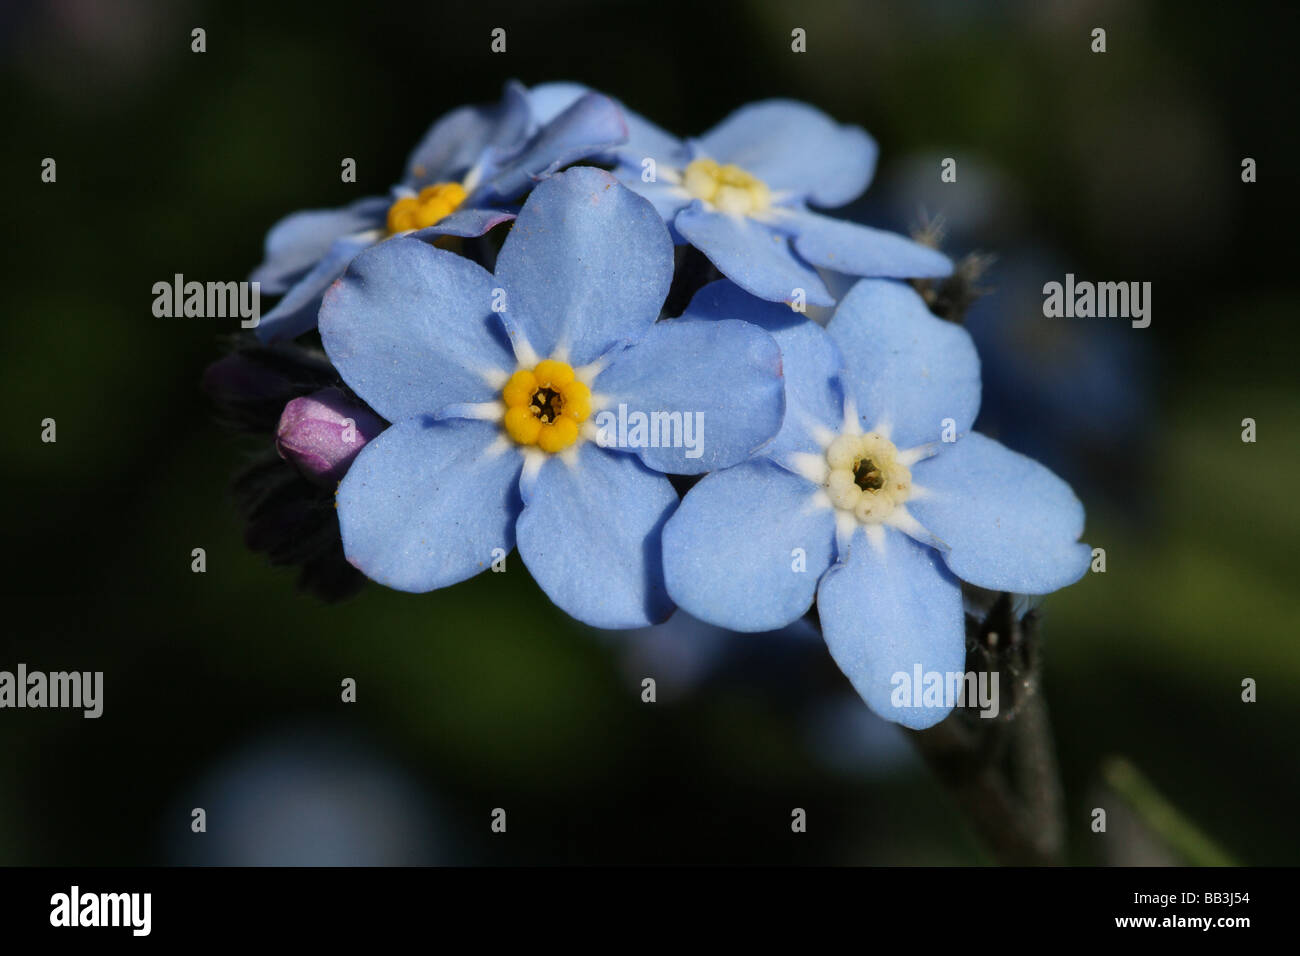 Forget-me-not,Myosotis,Family Boraginaceae flowers in close up or macro detail Stock Photo